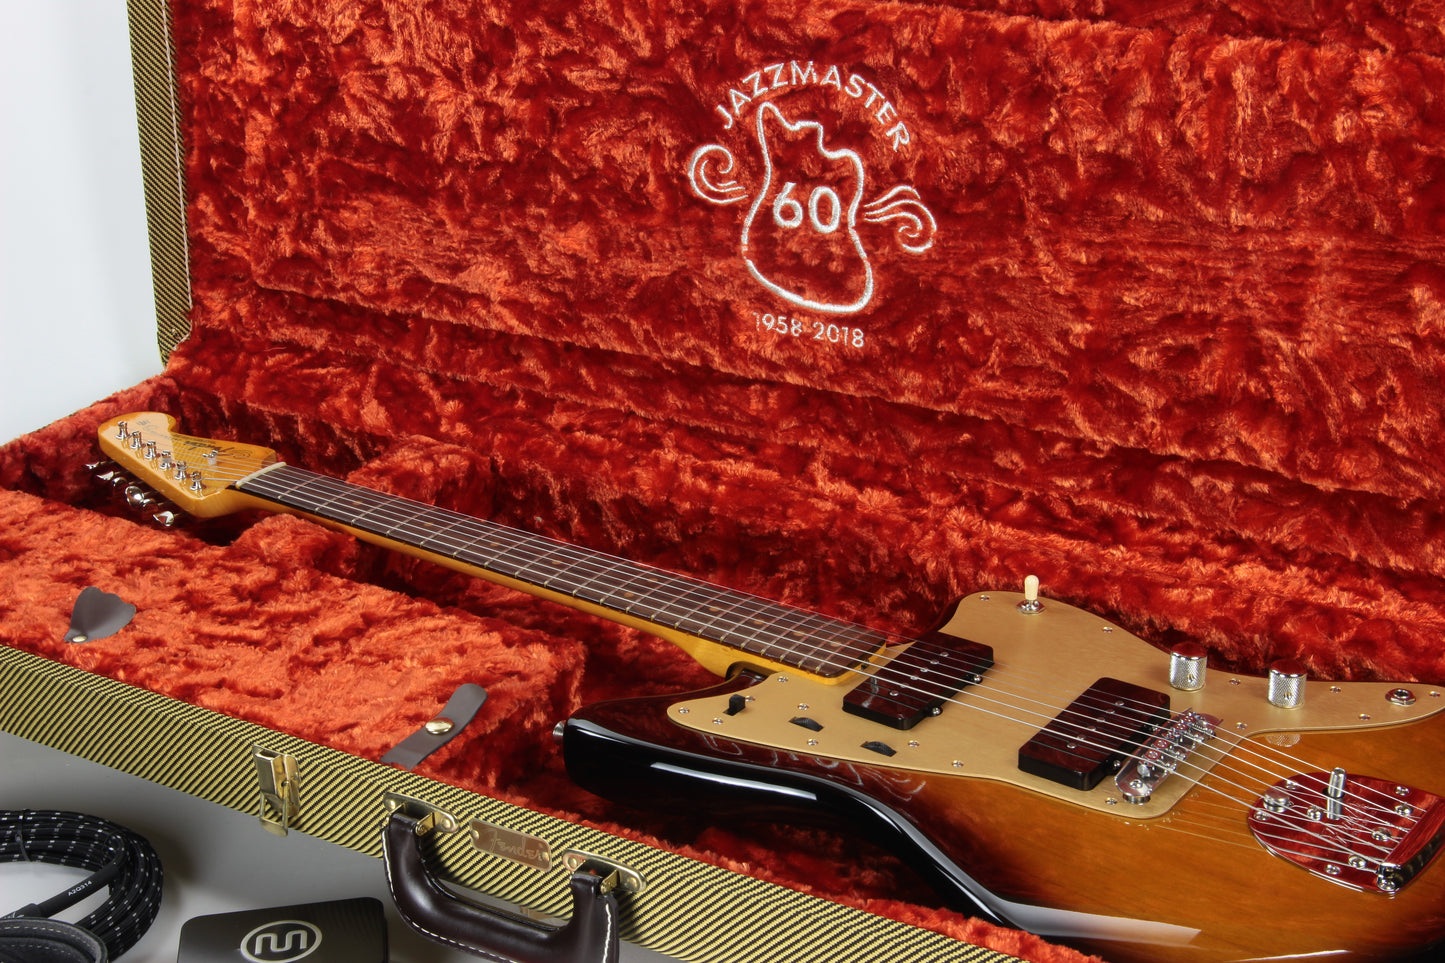 2018 Fender 60th Anniversary '58 Jazzmaster Sunburst USA American Vintage 1958 Reissue - ASH, Rosewood Fretboard 2-Color